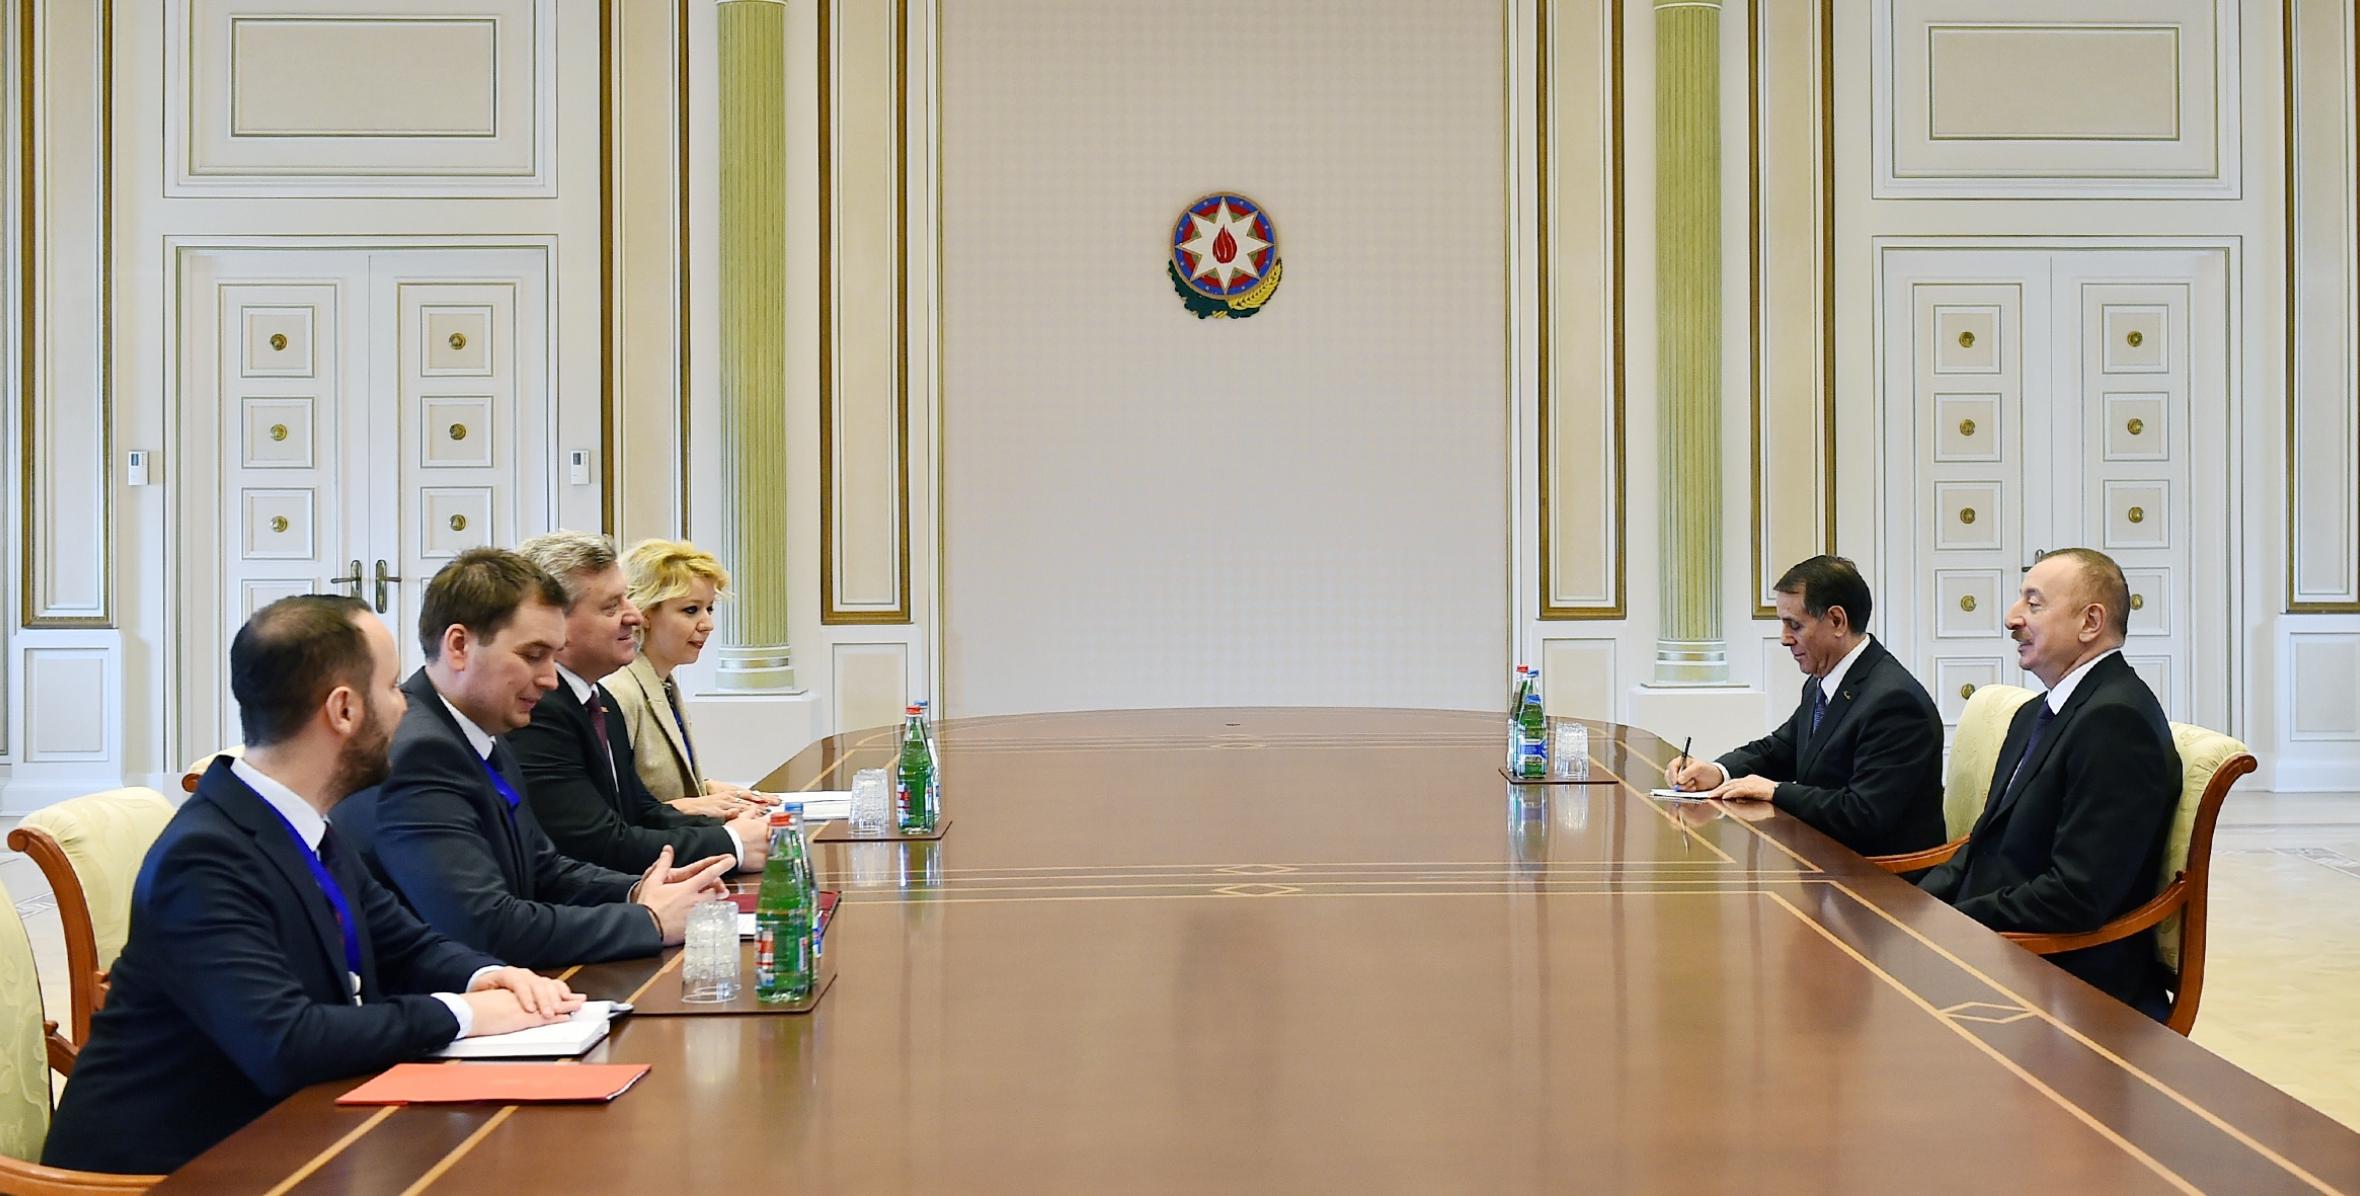 Ilham Aliyev met with President of Republic of Macedonia Gjorge Ivanov